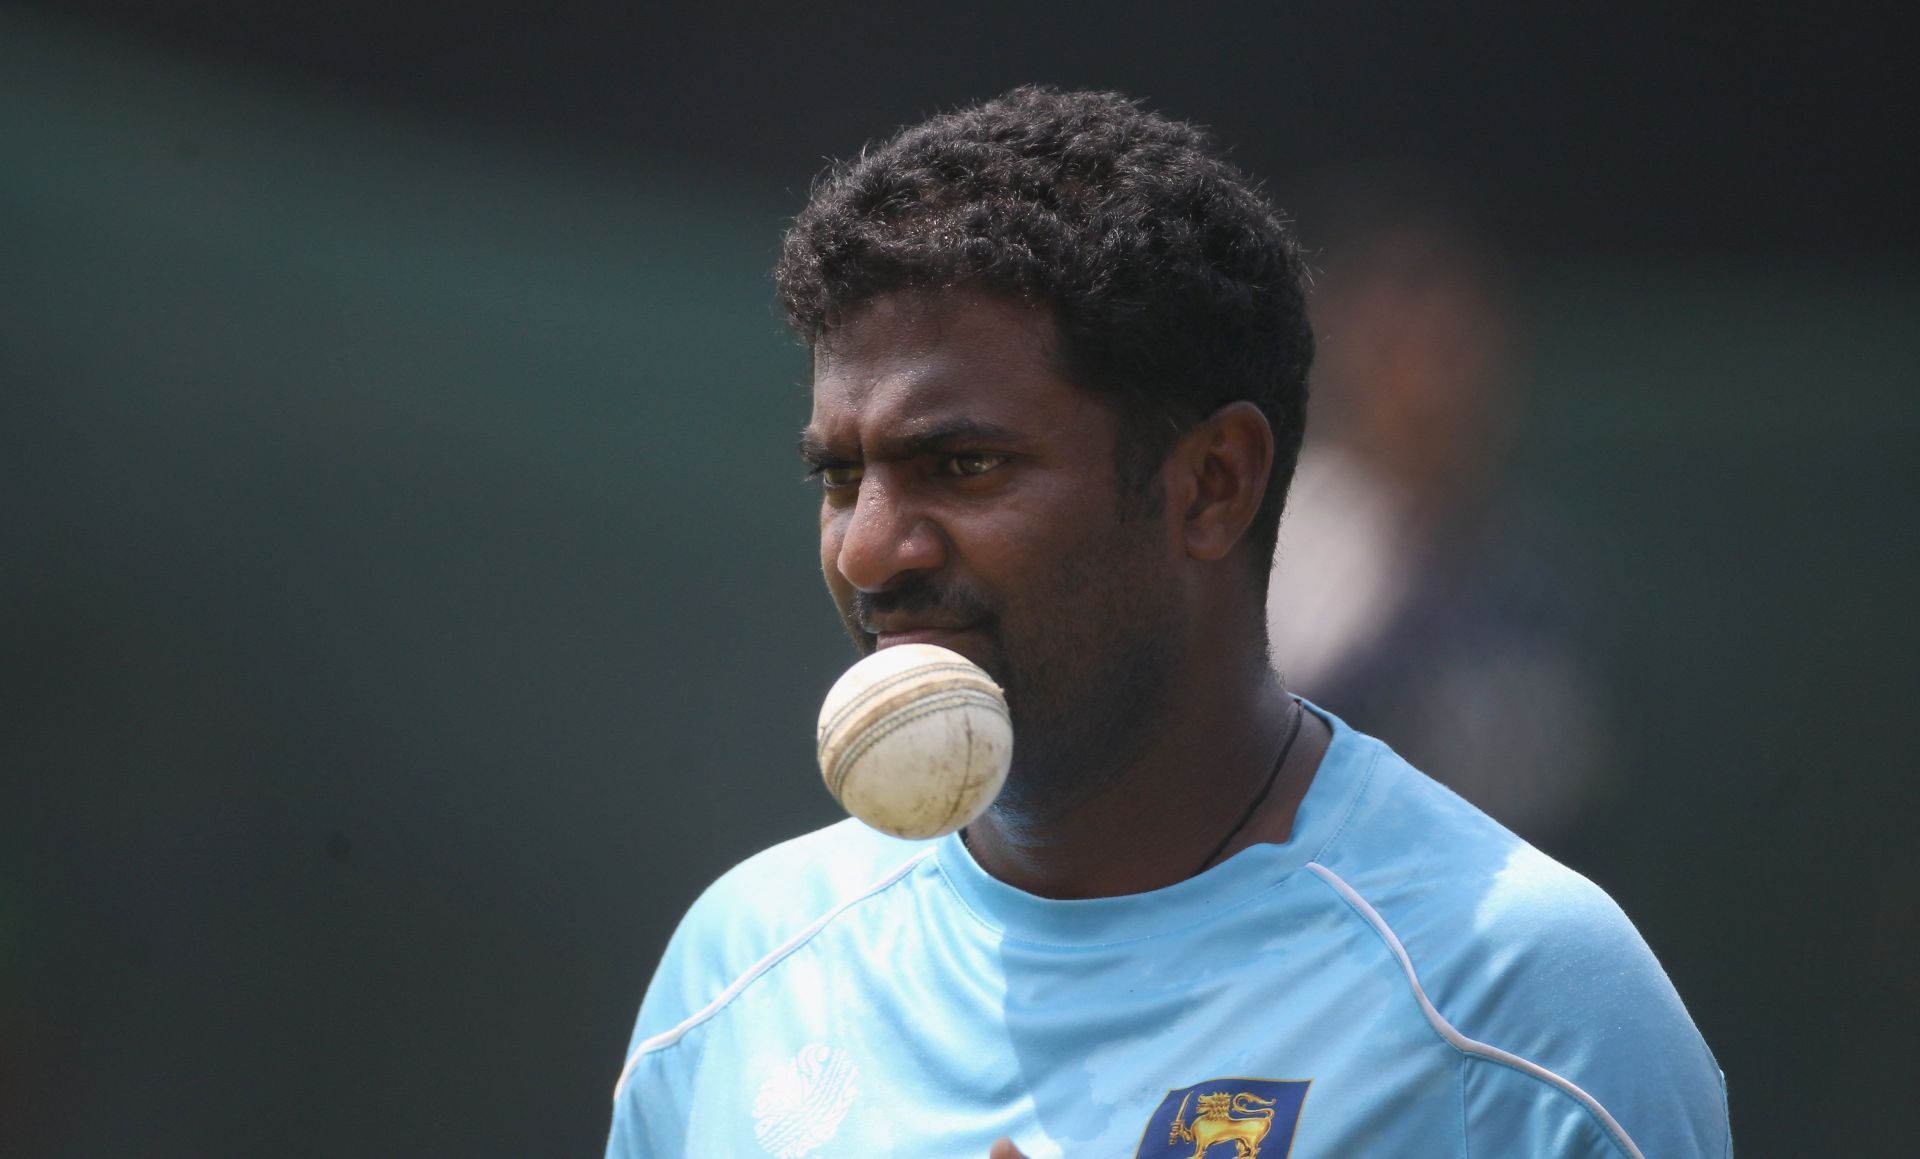 Muttiah Muralitharan took 15 wickets for Sri Lanka in that mega event